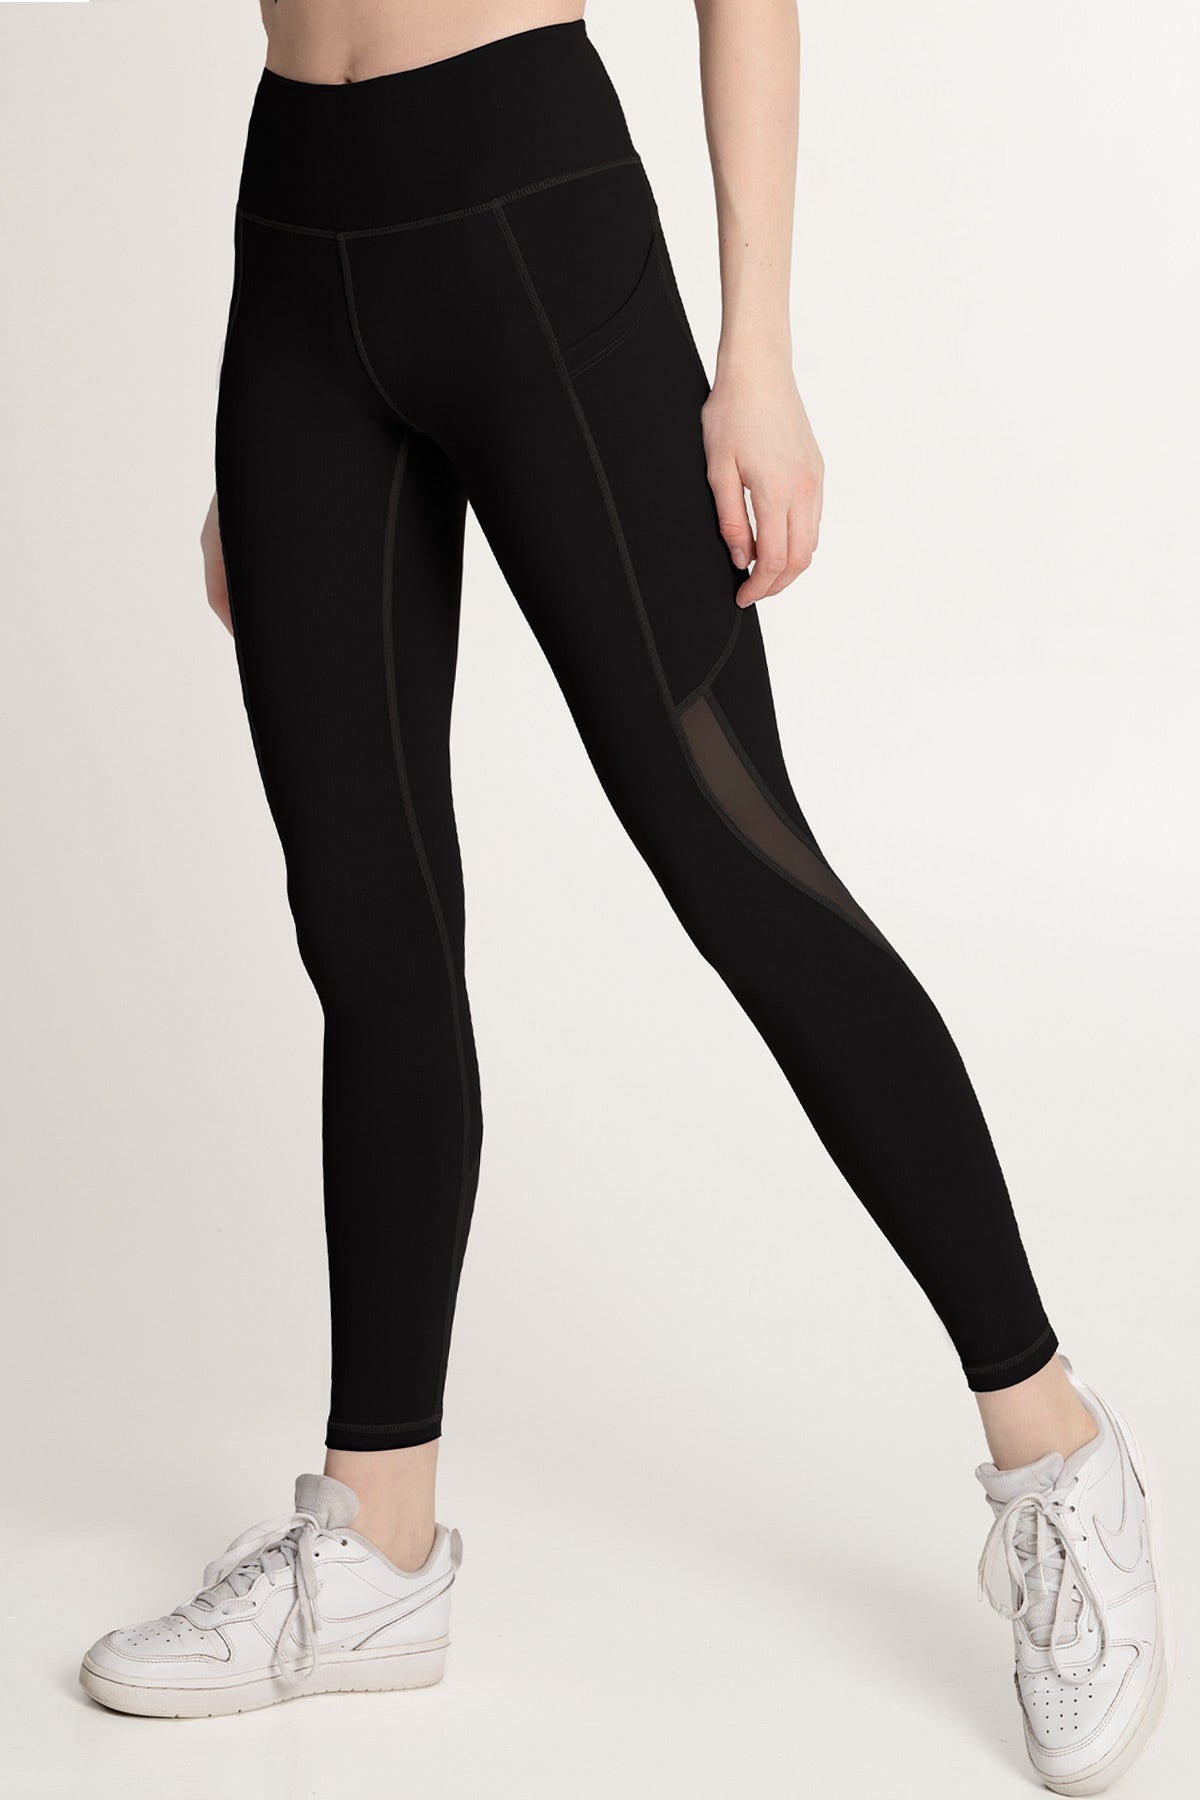 Image of SALE! Black Cassi Workout Leggings Yoga Pants with Mesh & Pockets - Women